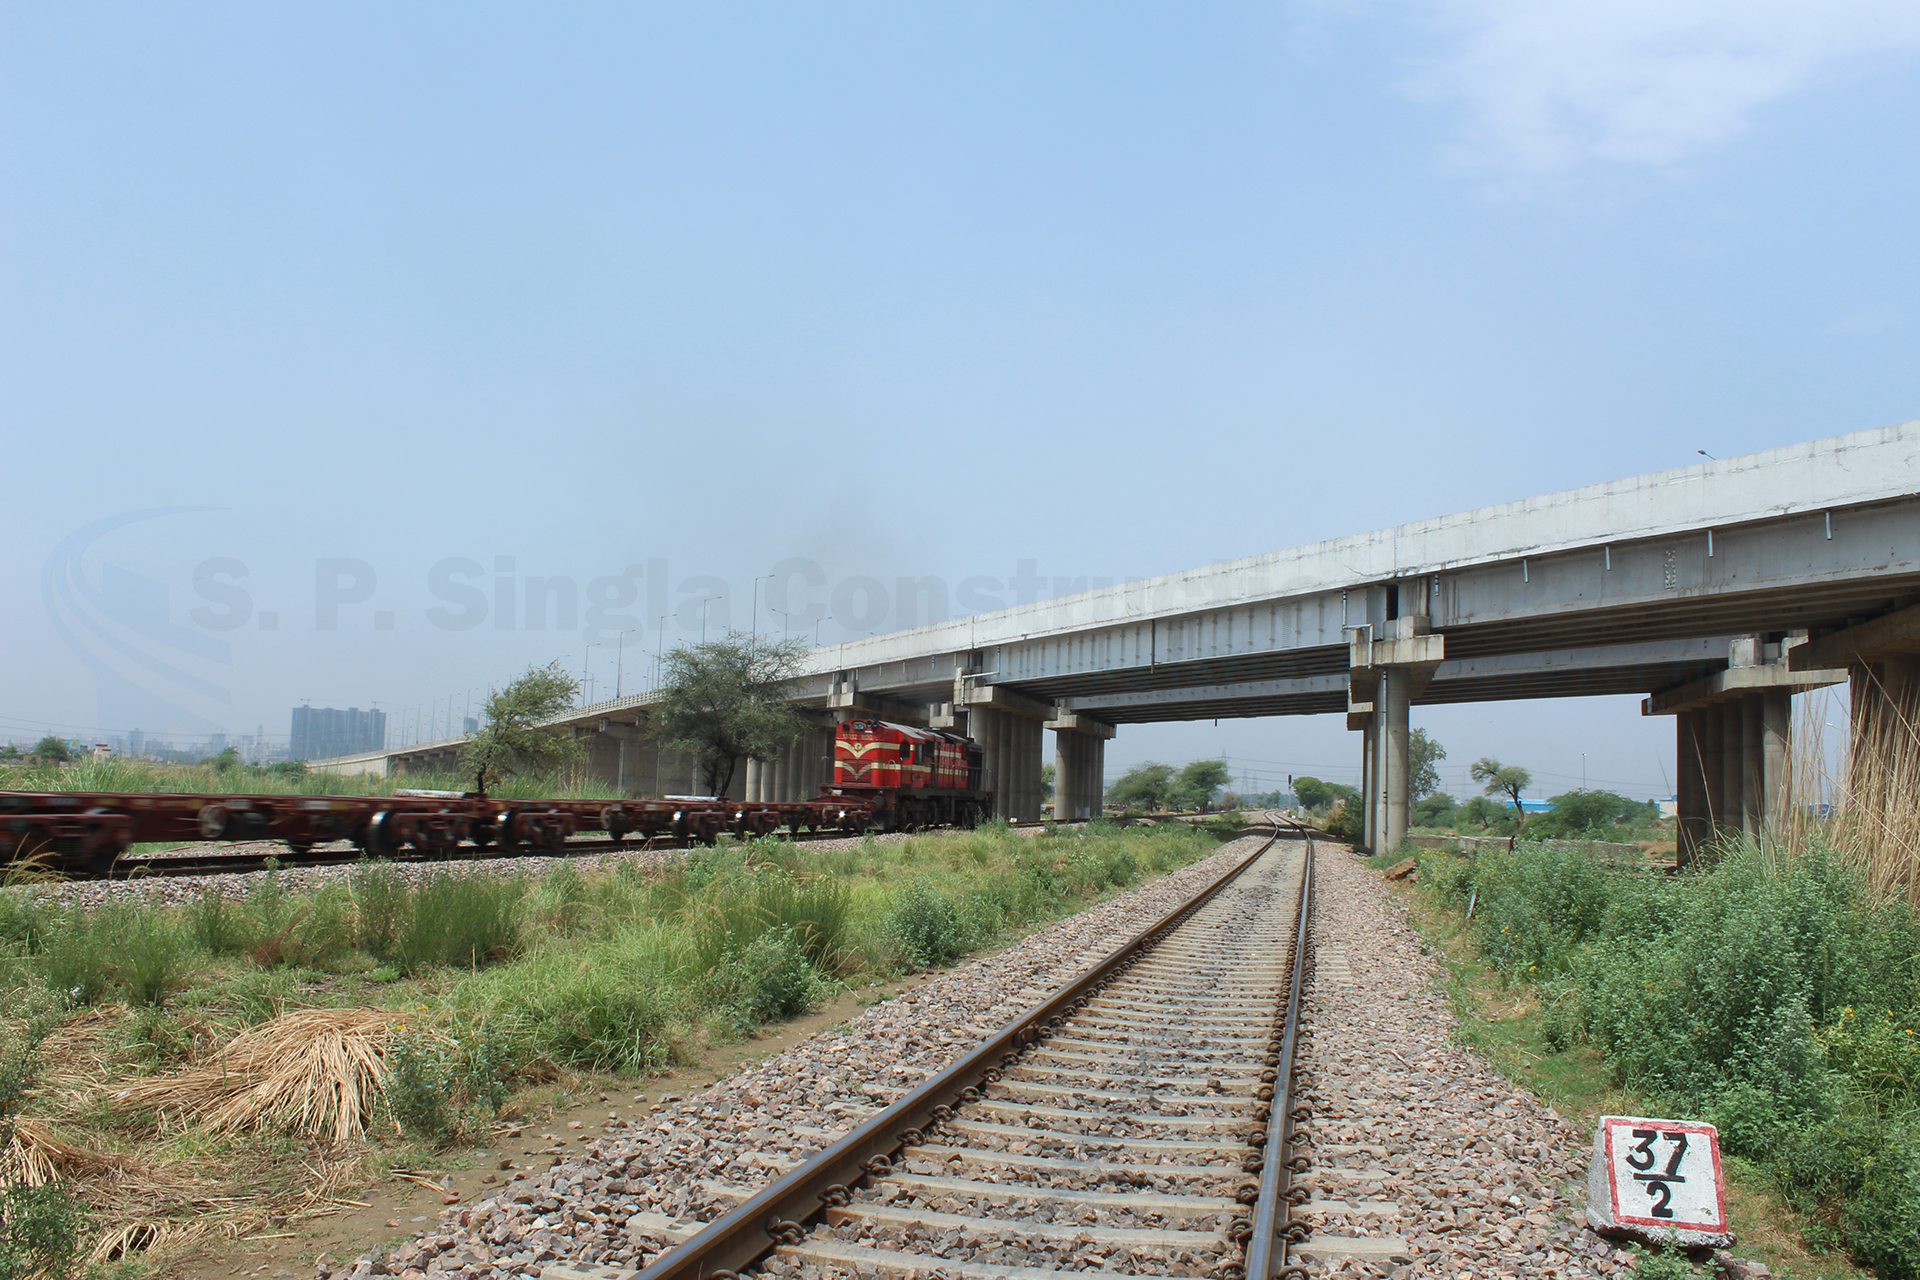 8 Lane Road Over Bridge (ROB) in Gurgaon, Haryana